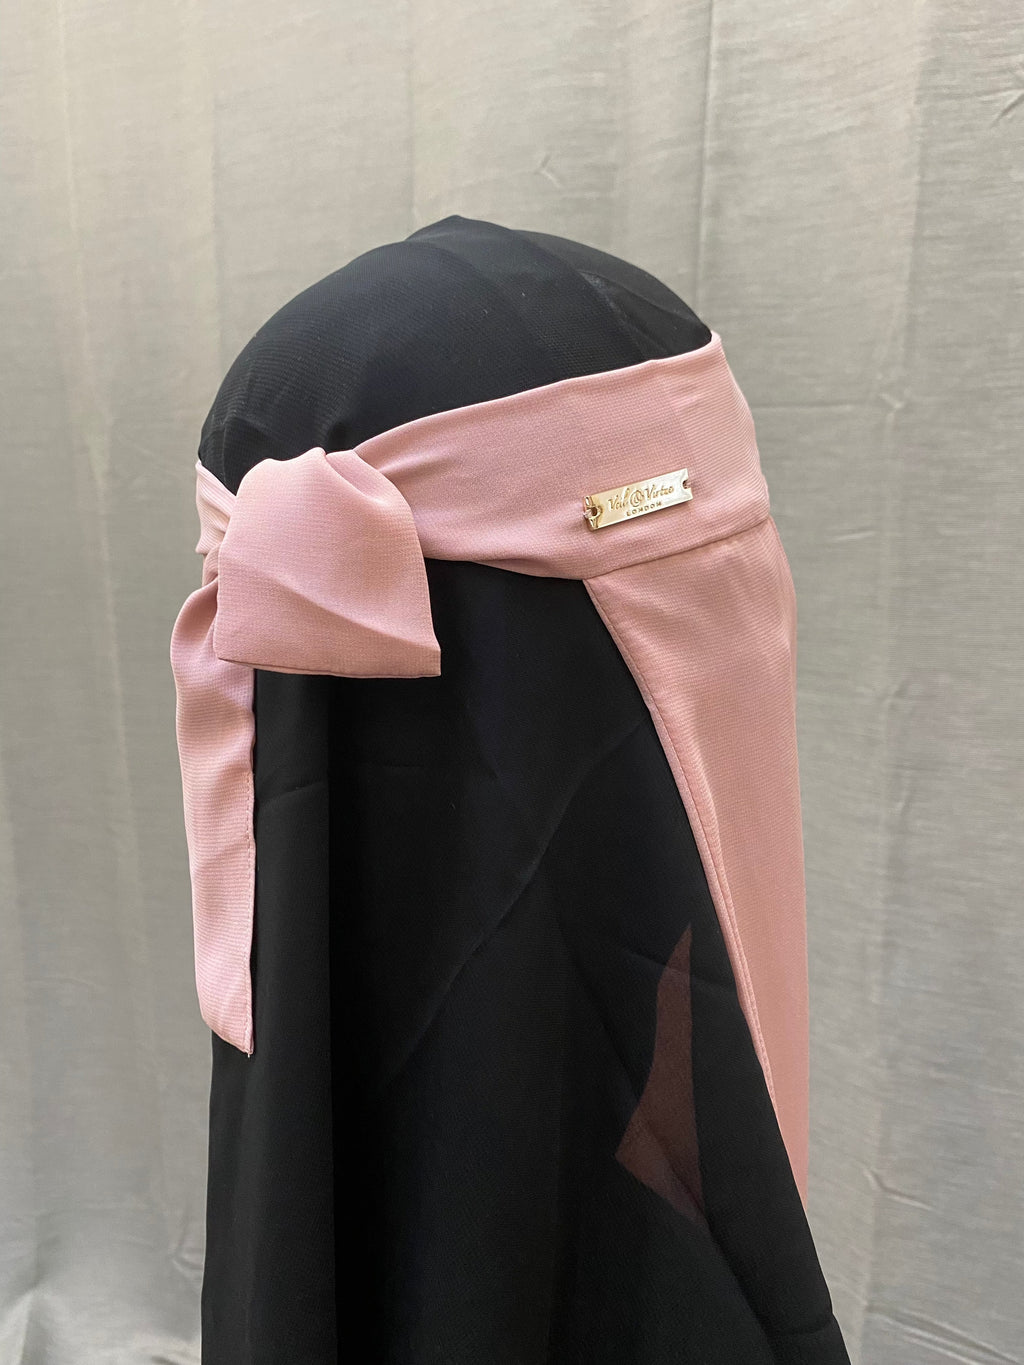 veil-and-virtue-single-layer-niqab-nude-pink